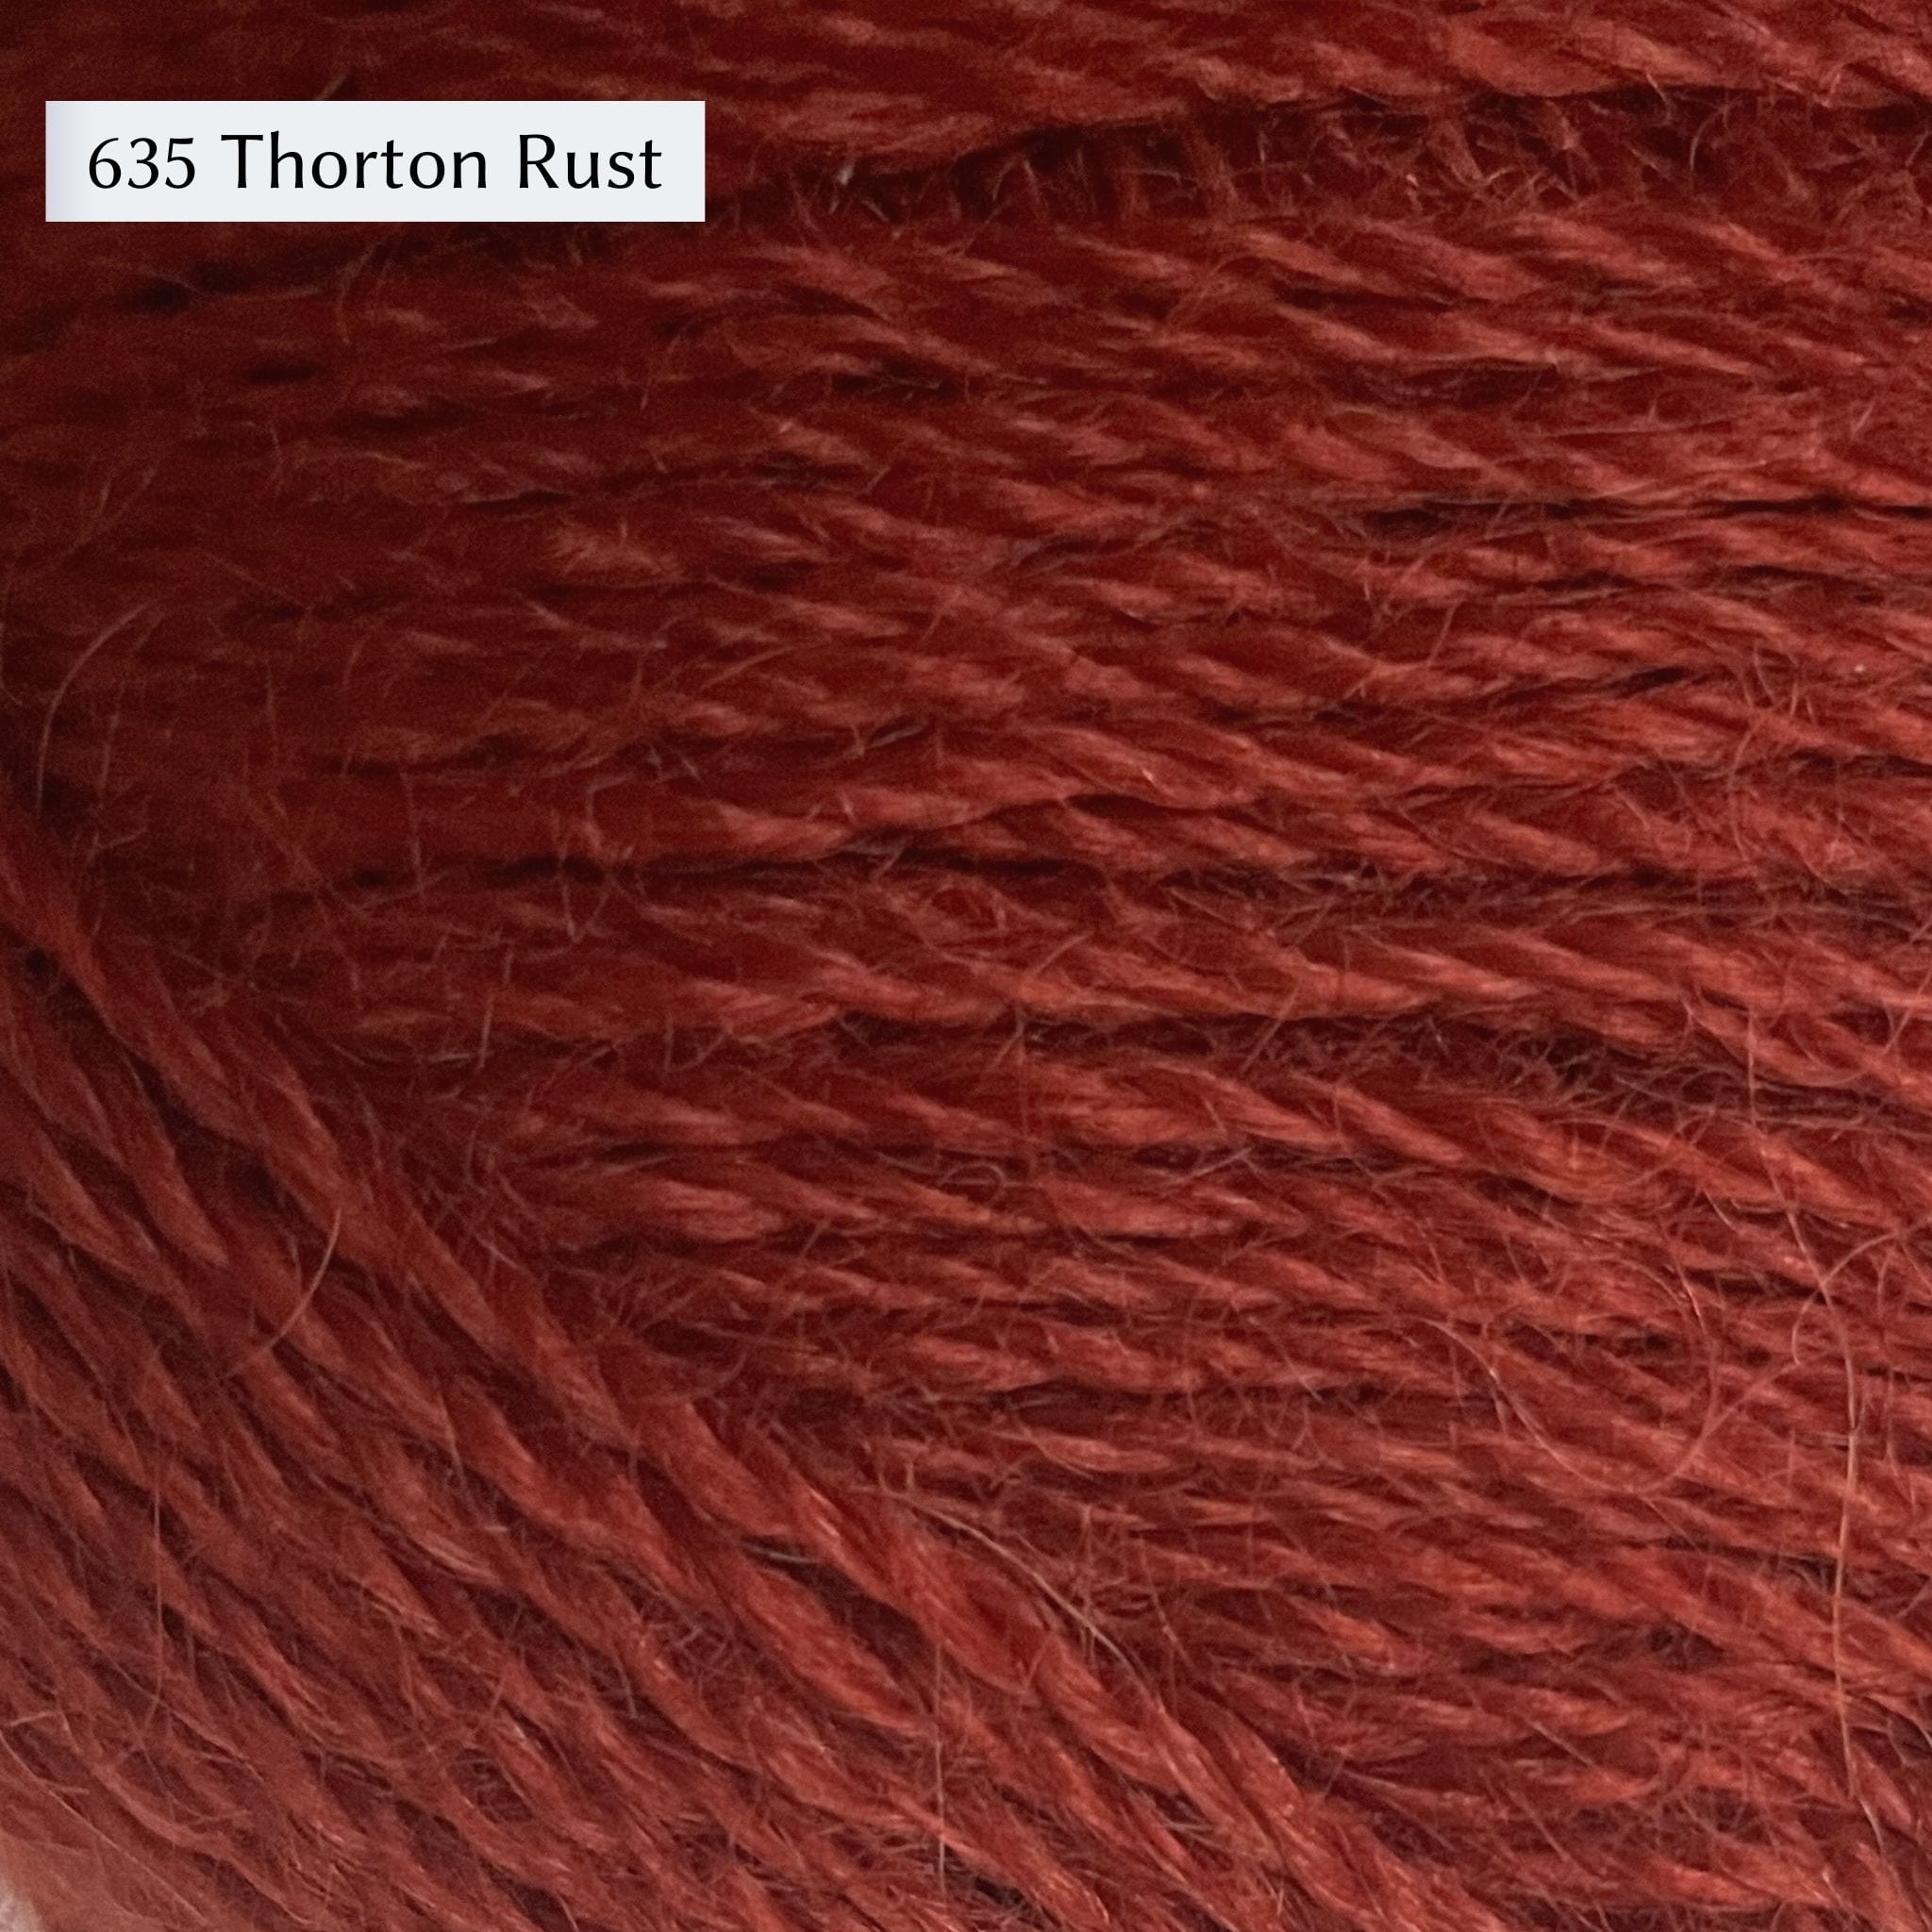 Wensleydale Longwool Sheep Shop 4ply yarn, a fingering weight yarn, in color 635 Thornton Rust, a rusty red-orange